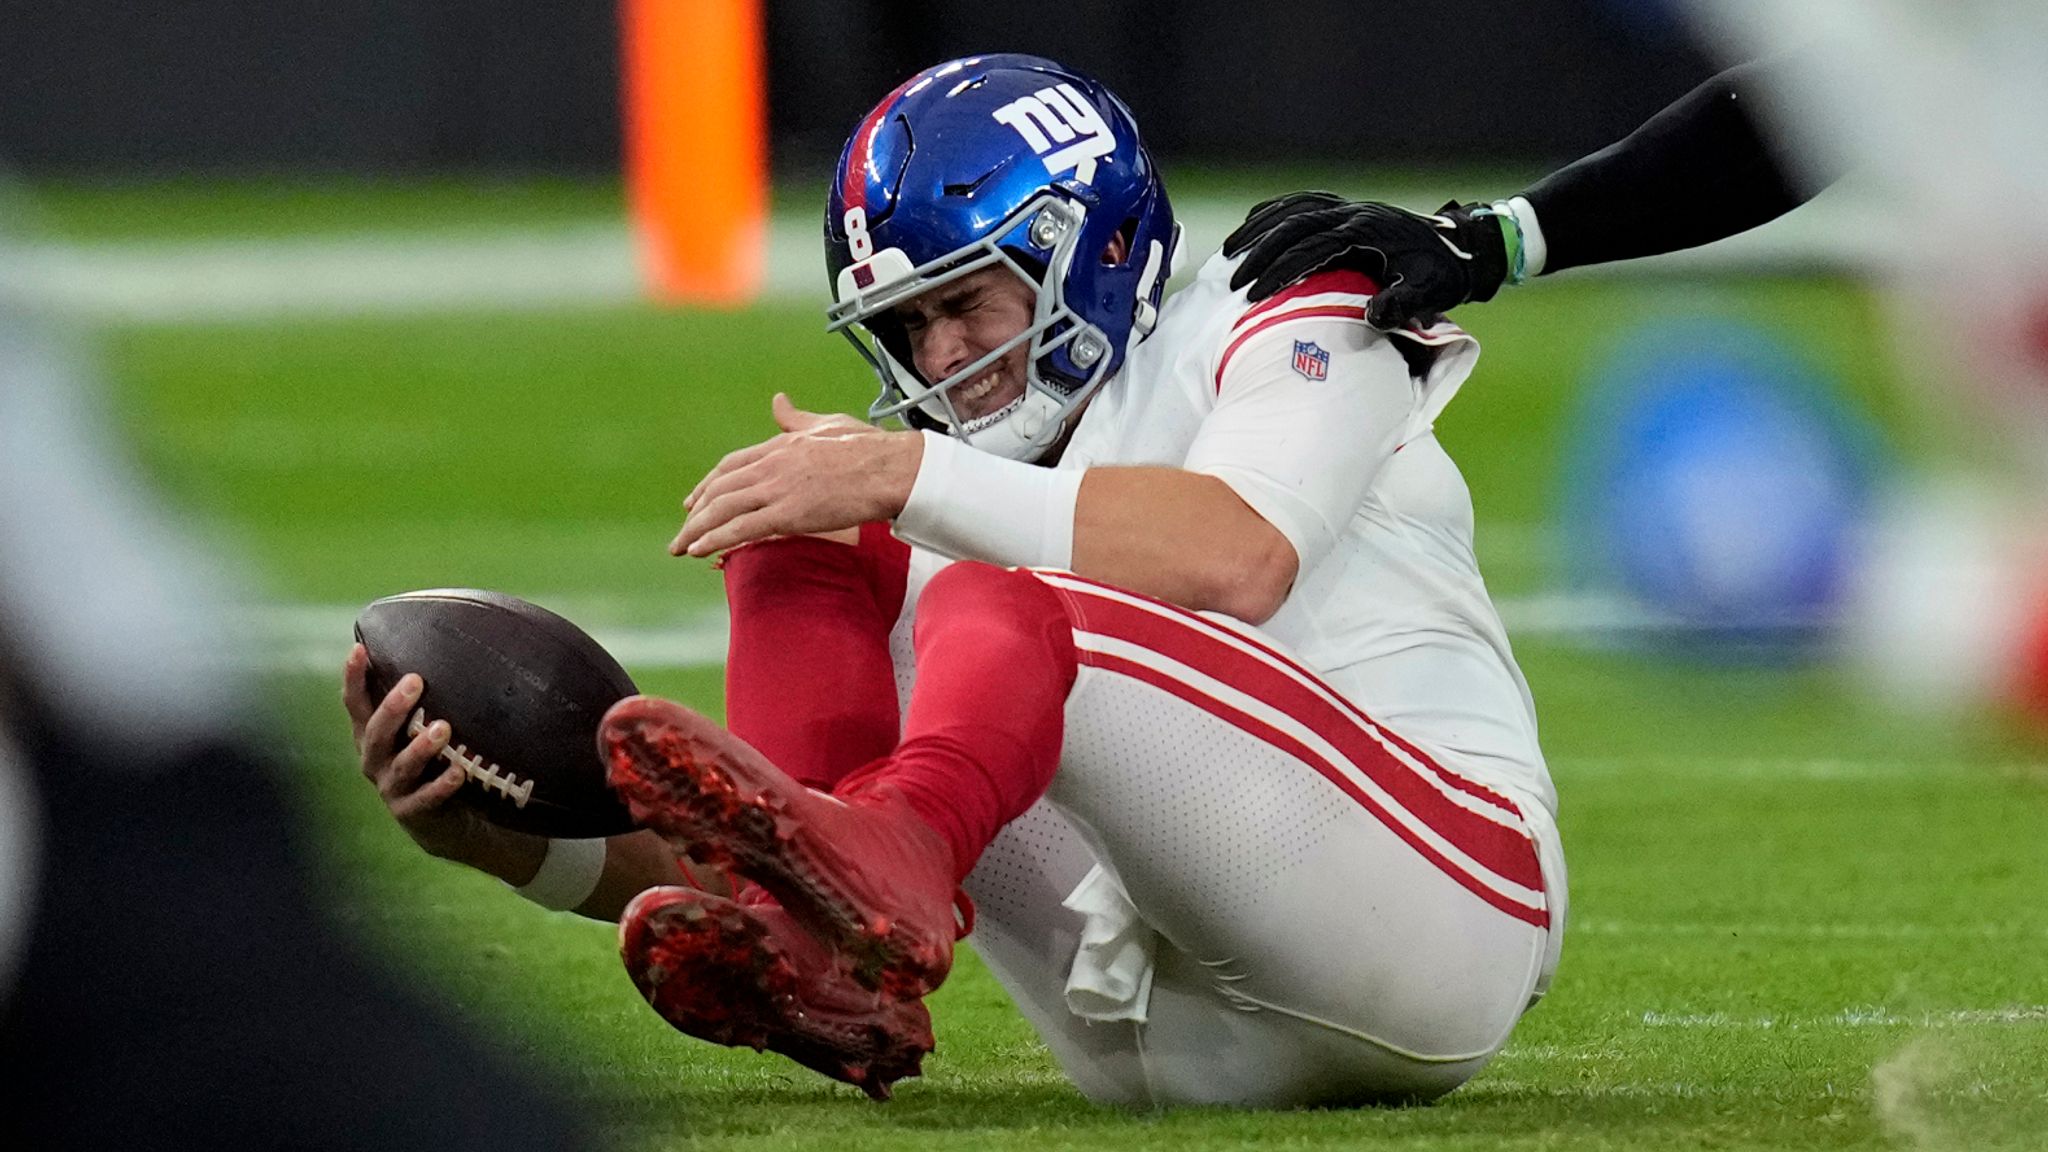 NFL: Daniel Jones out for the season, New York Giants' QB